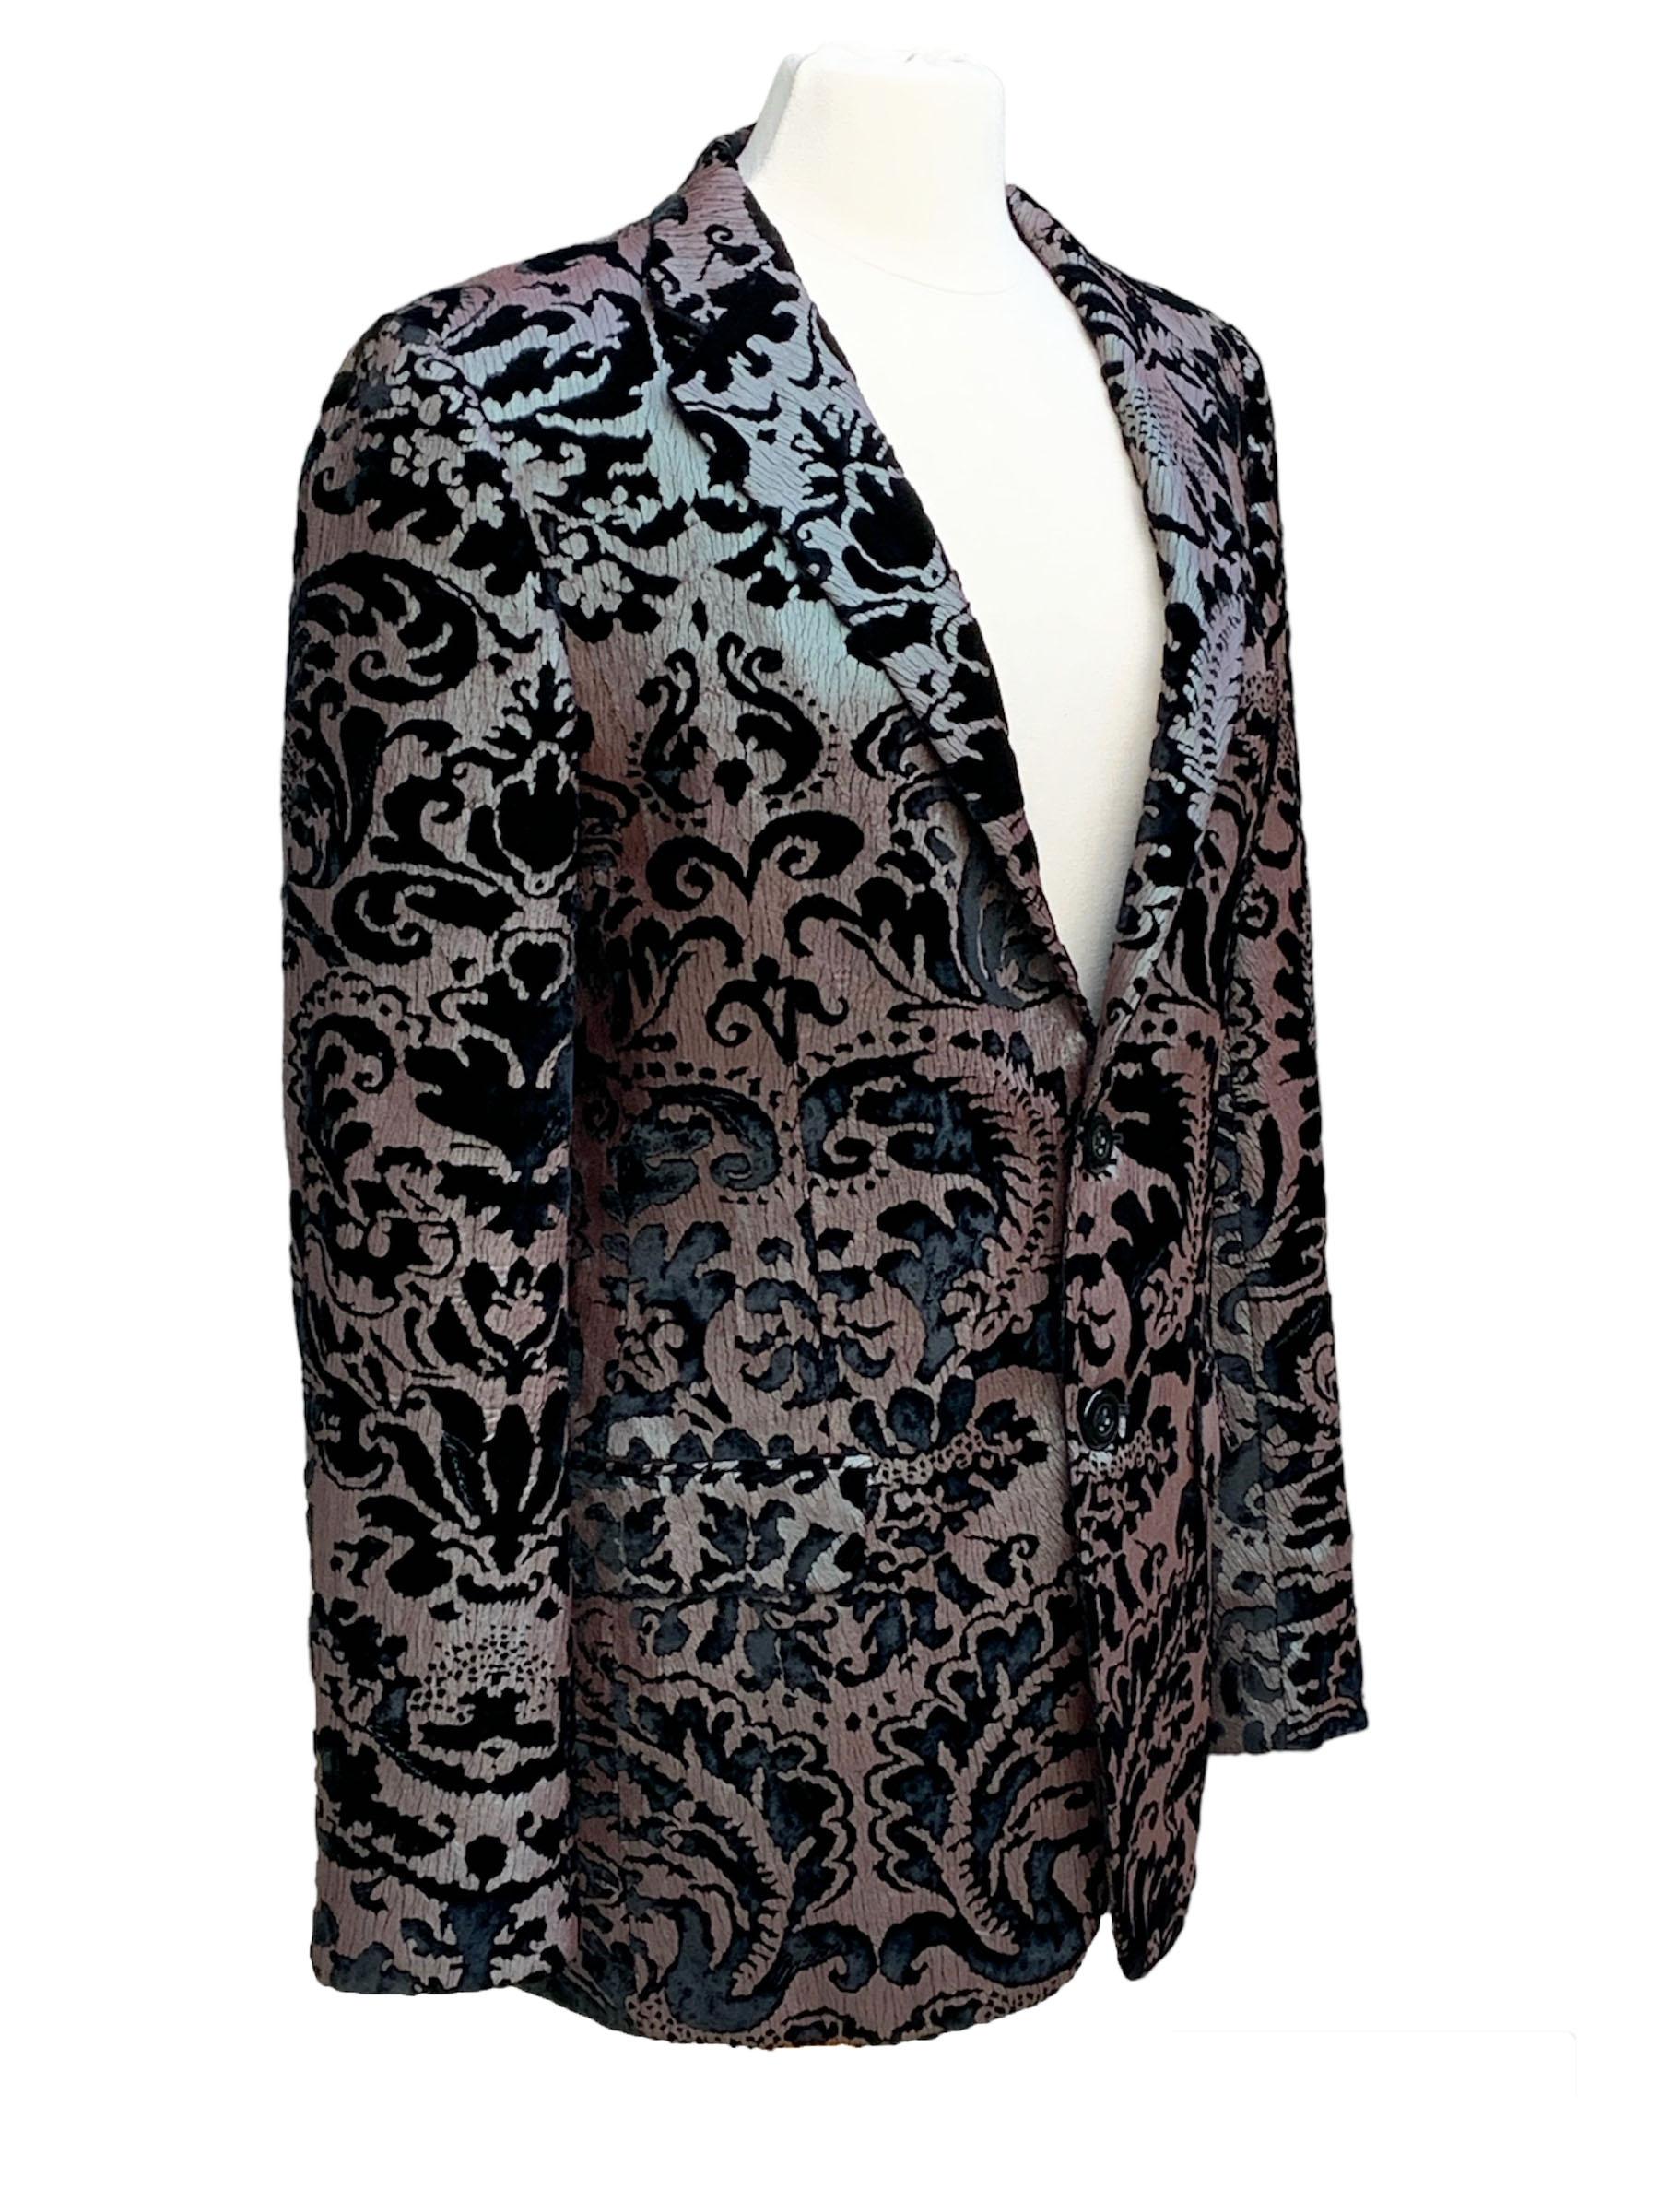 Black Tom Ford for Gucci SS 2000 Gothic Damask Iridescent Paint Velvet Blazer 48 US 38 For Sale